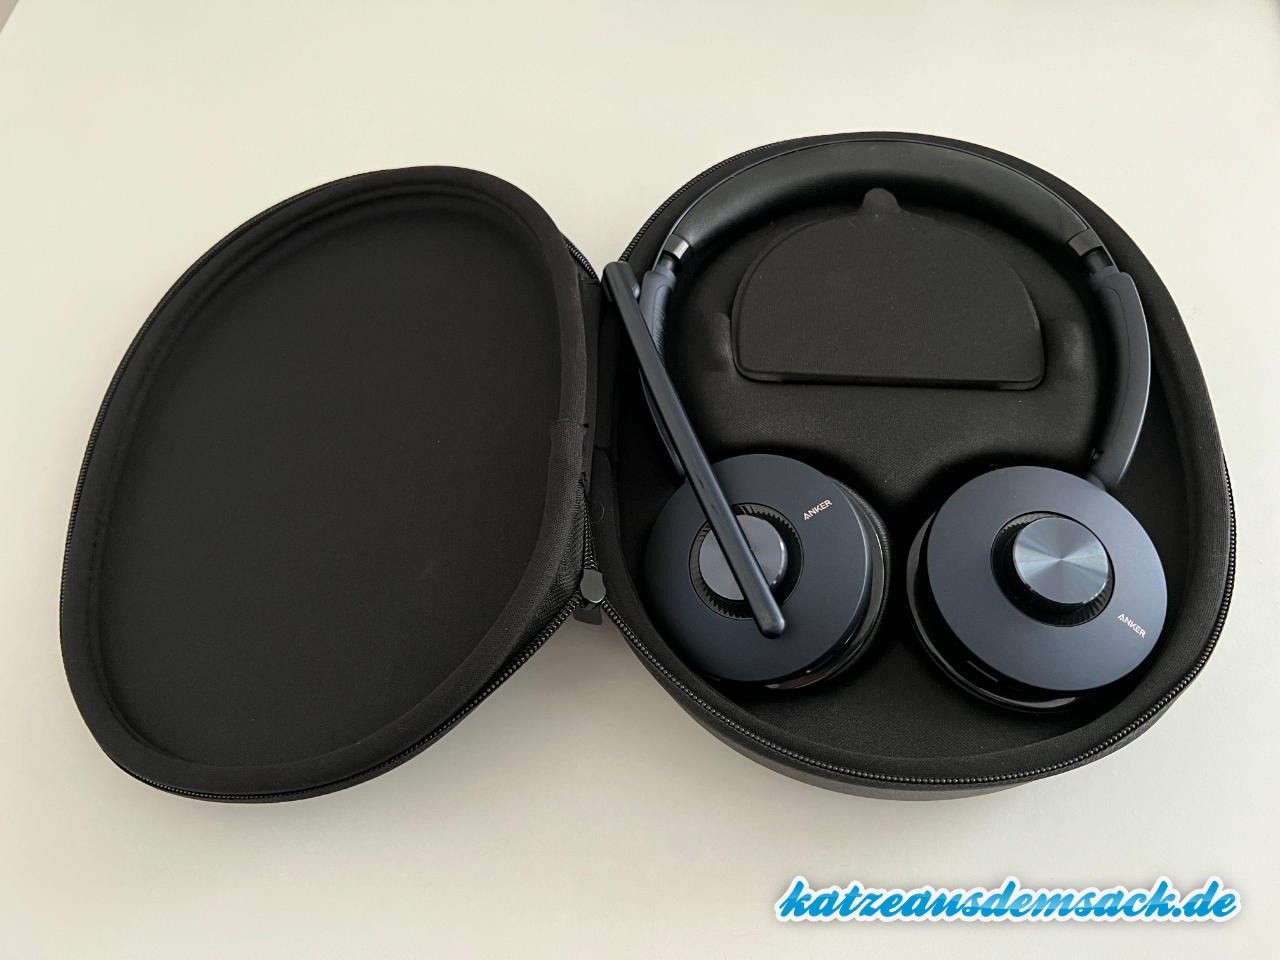 Anker PowerConf H700 - Headset - Transporttasche für Büro, Café, Homeoffice